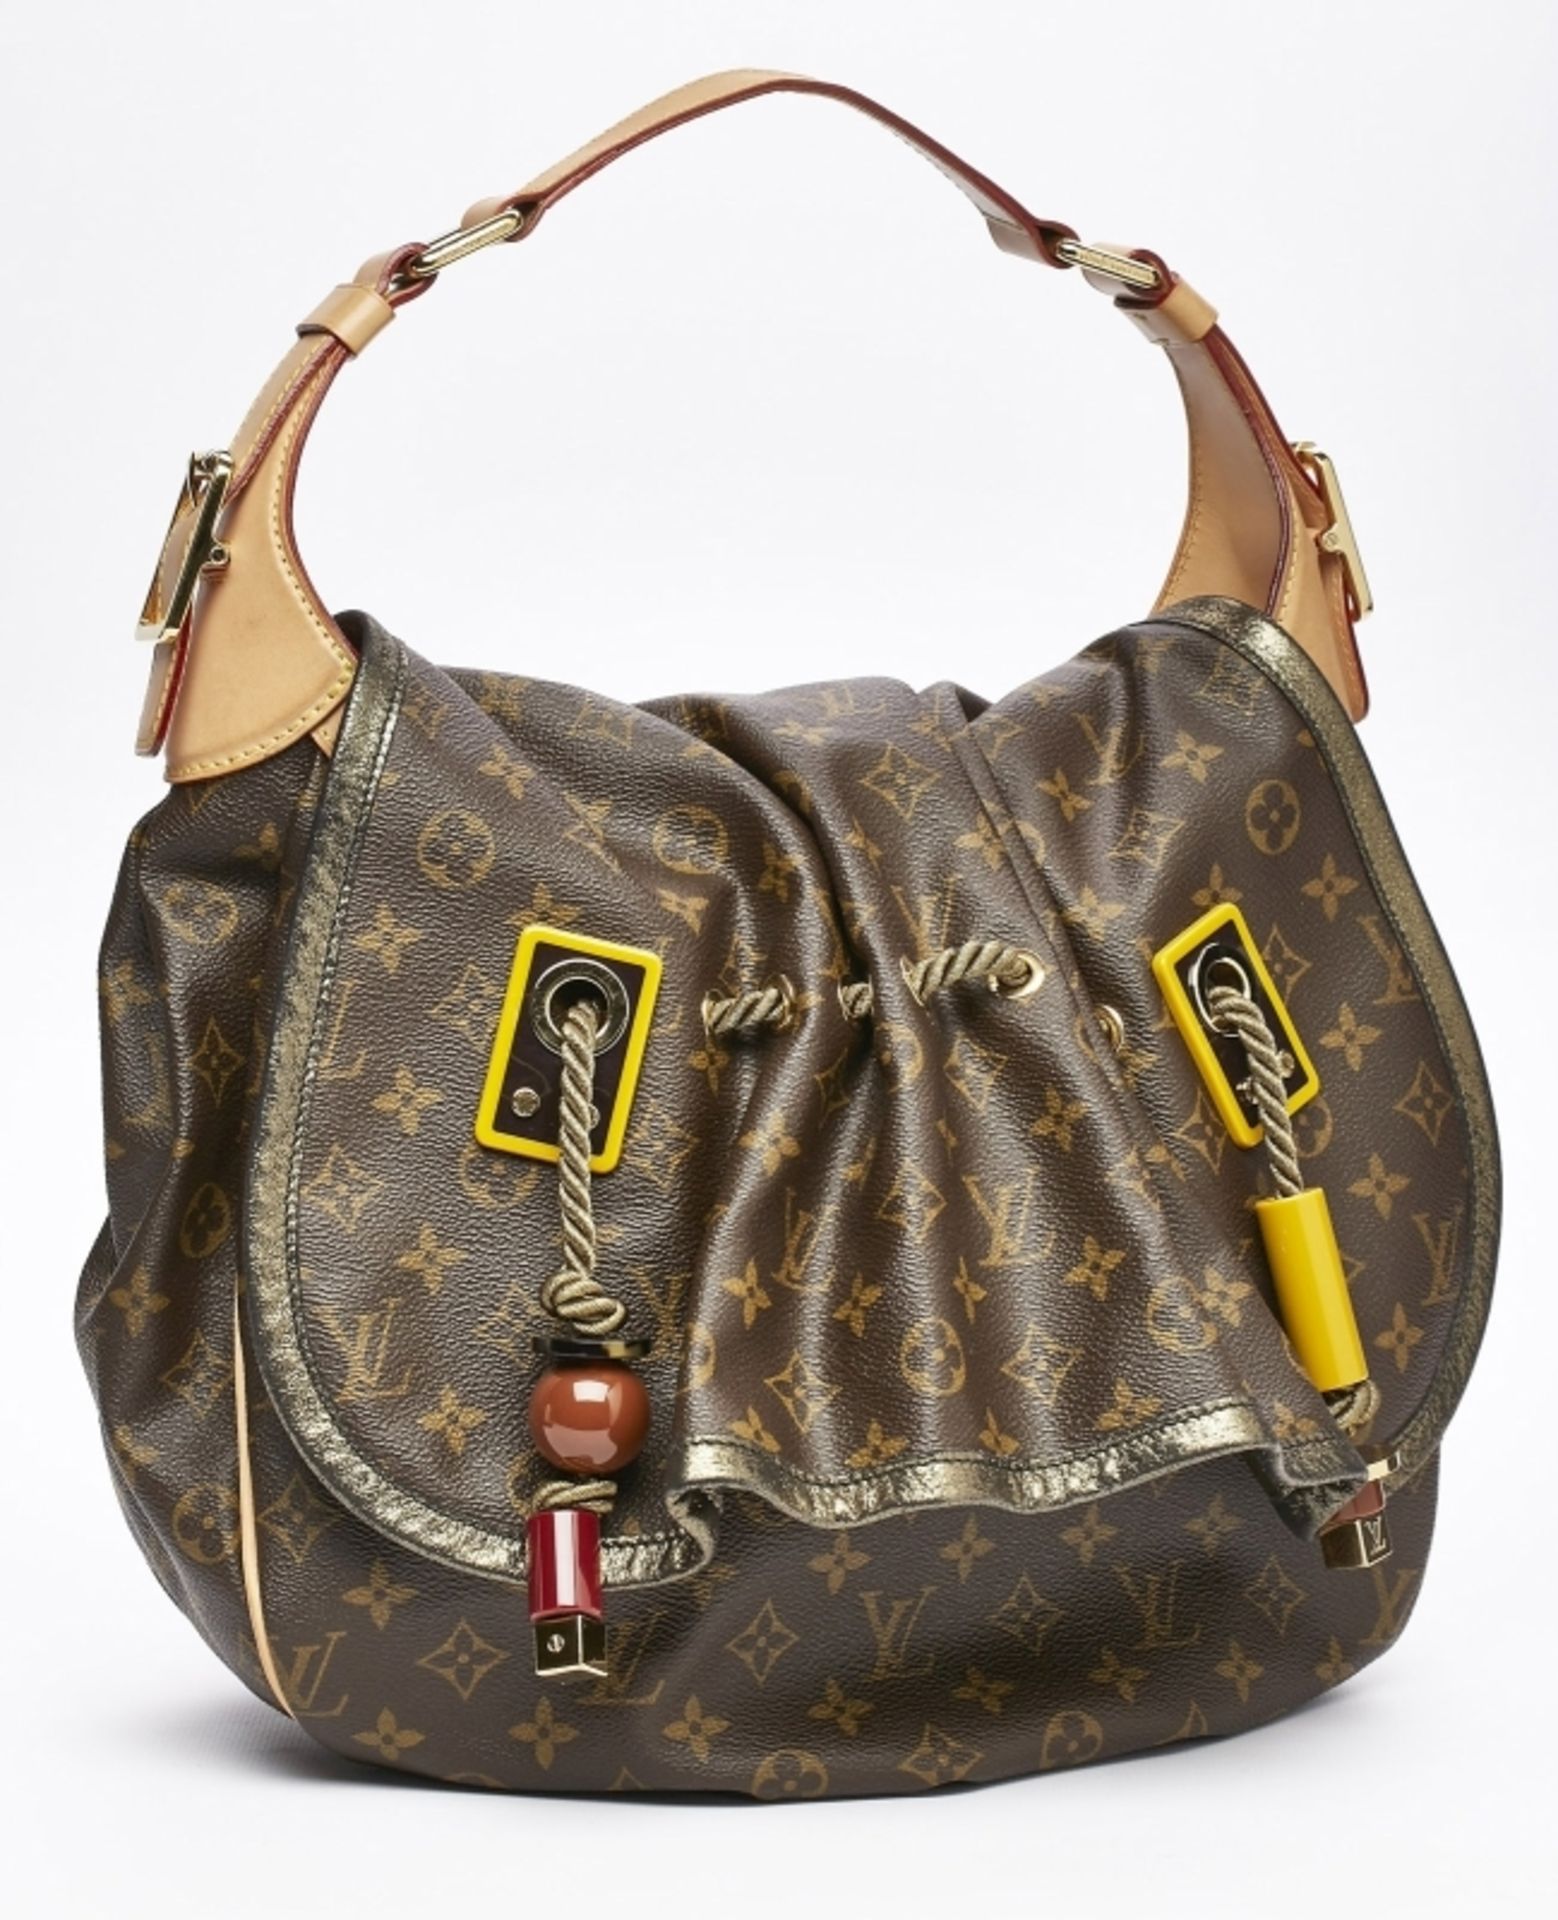 Handtasche "Kalahari GM", Louis Vuitton 2009.